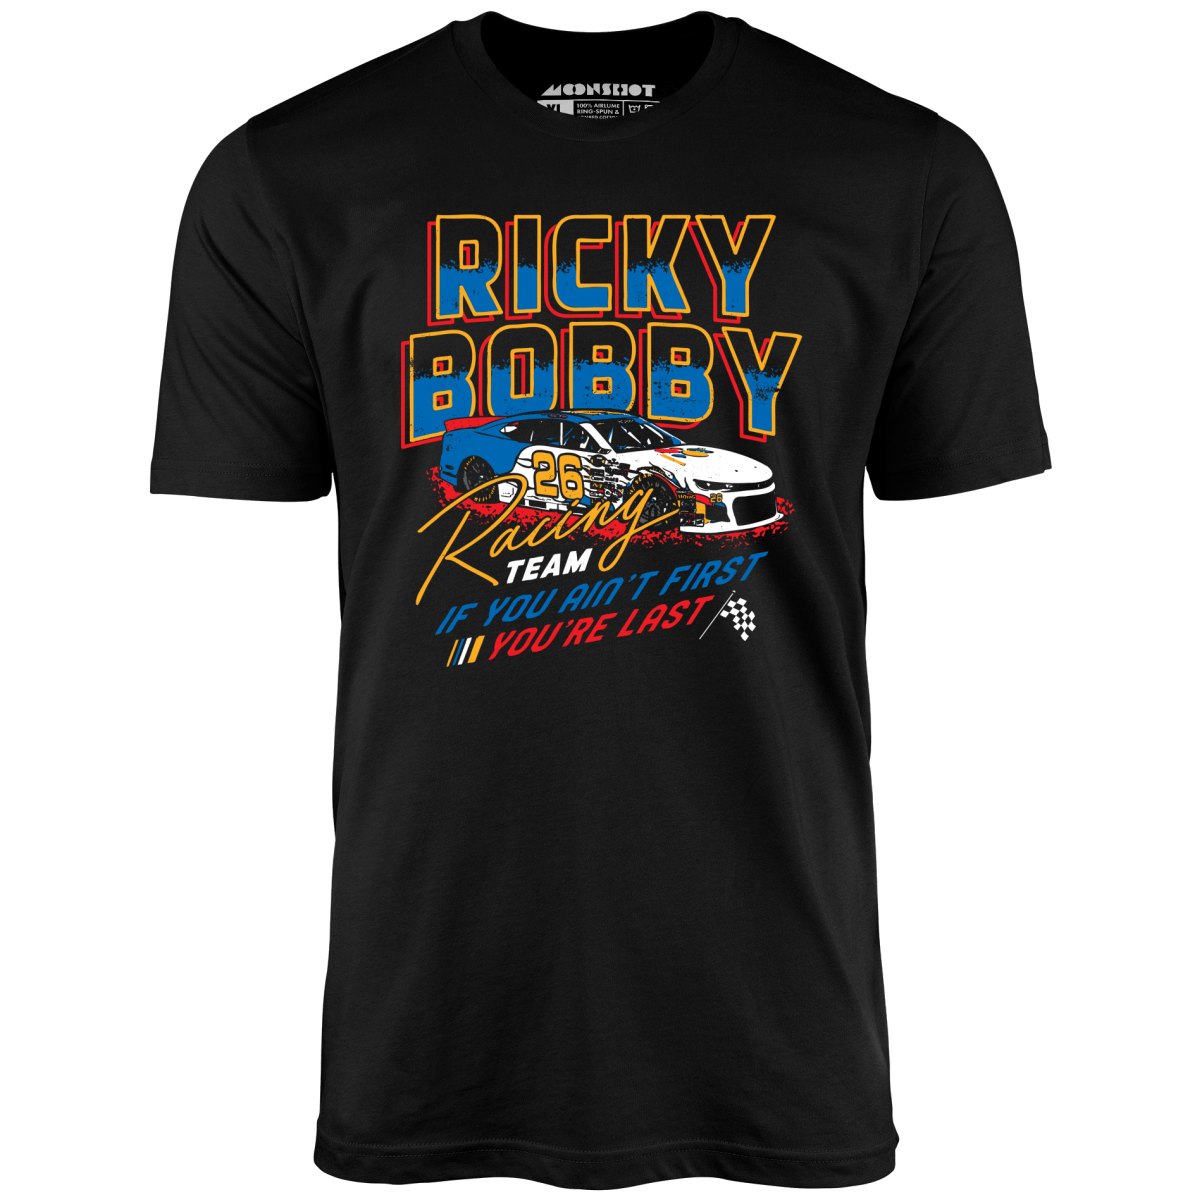 Ricky Bobby Racing Team - Unisex T-Shirt